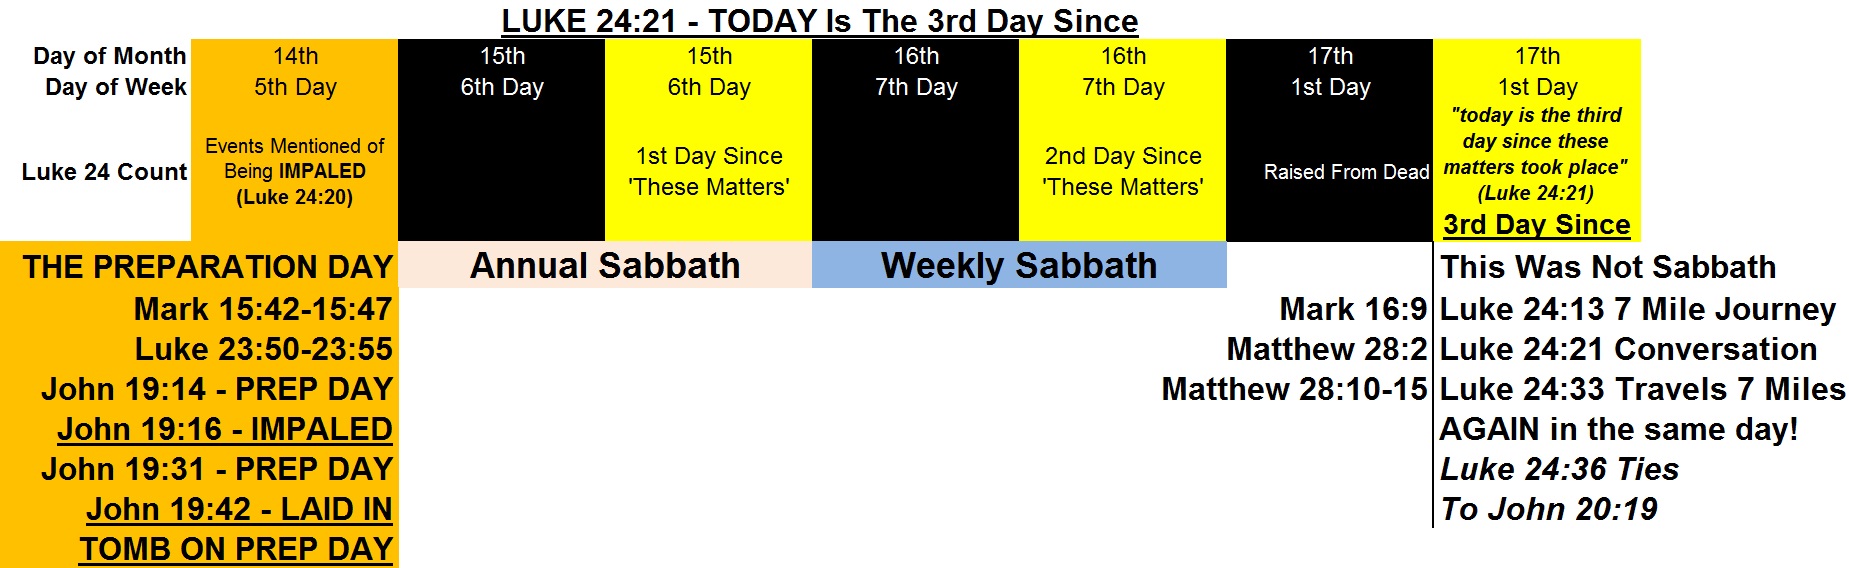 Luke 24:21 third day since diagram